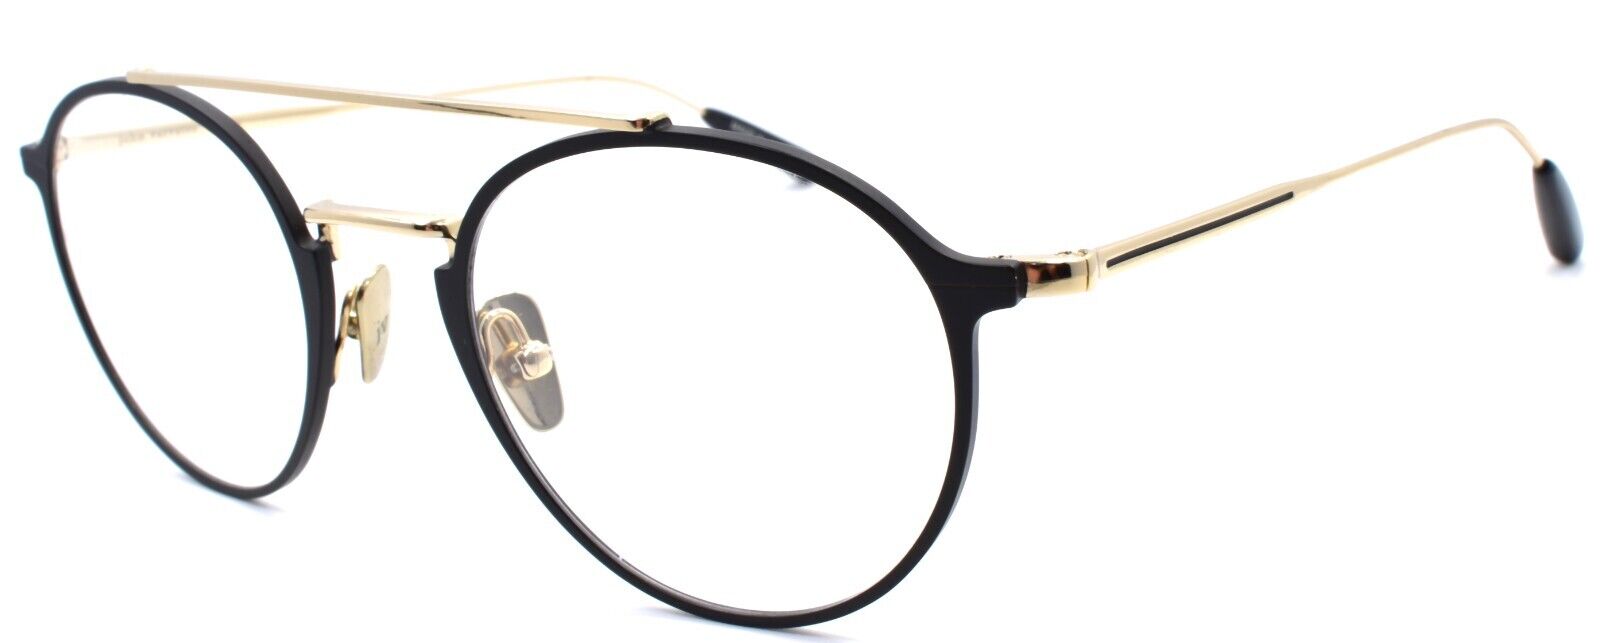 1-John Varvatos V174 Men's Eyeglasses Frames Aviator 50-22-145 Black / Gold Japan-751286330212-IKSpecs